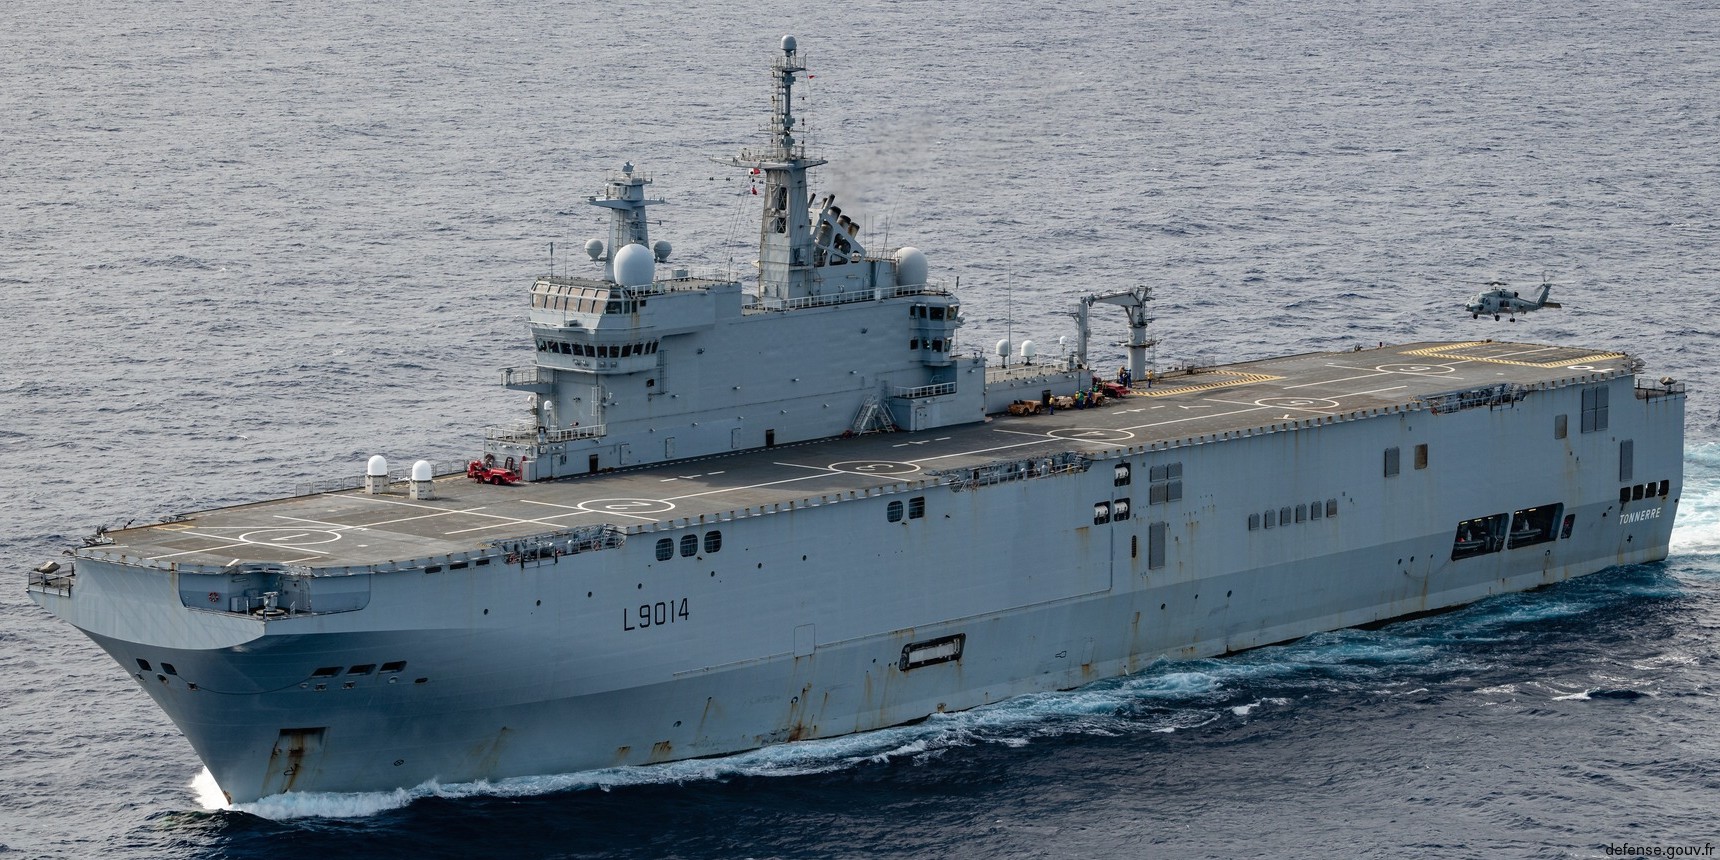 l-9014 fs tonnere mistral class amphibious assault command ship bpc french navy marine nationale 30